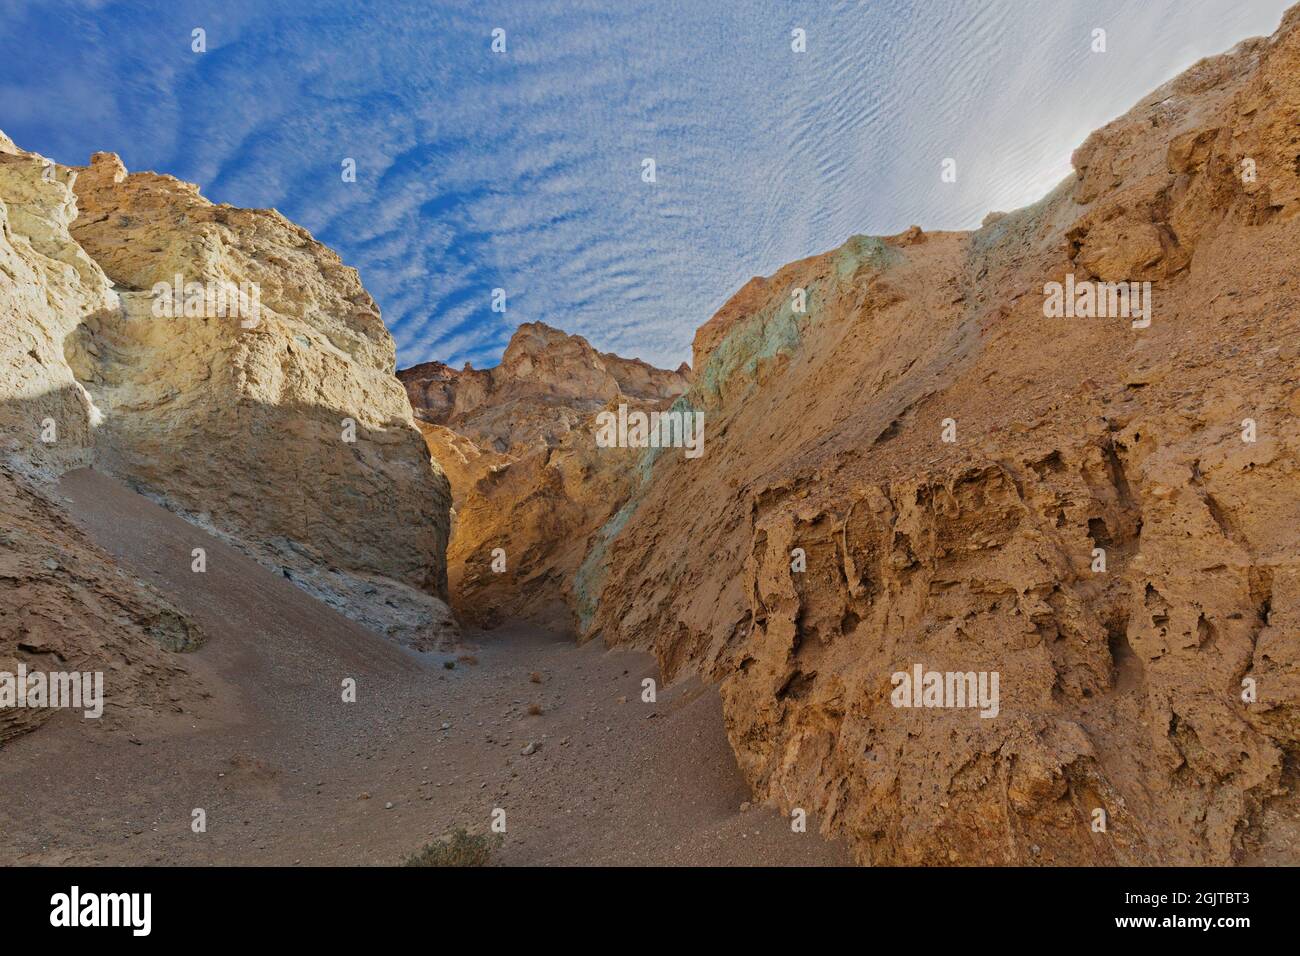 Der Desolation Canyon im Death Valley ist alles andere als desolat. Stockfoto